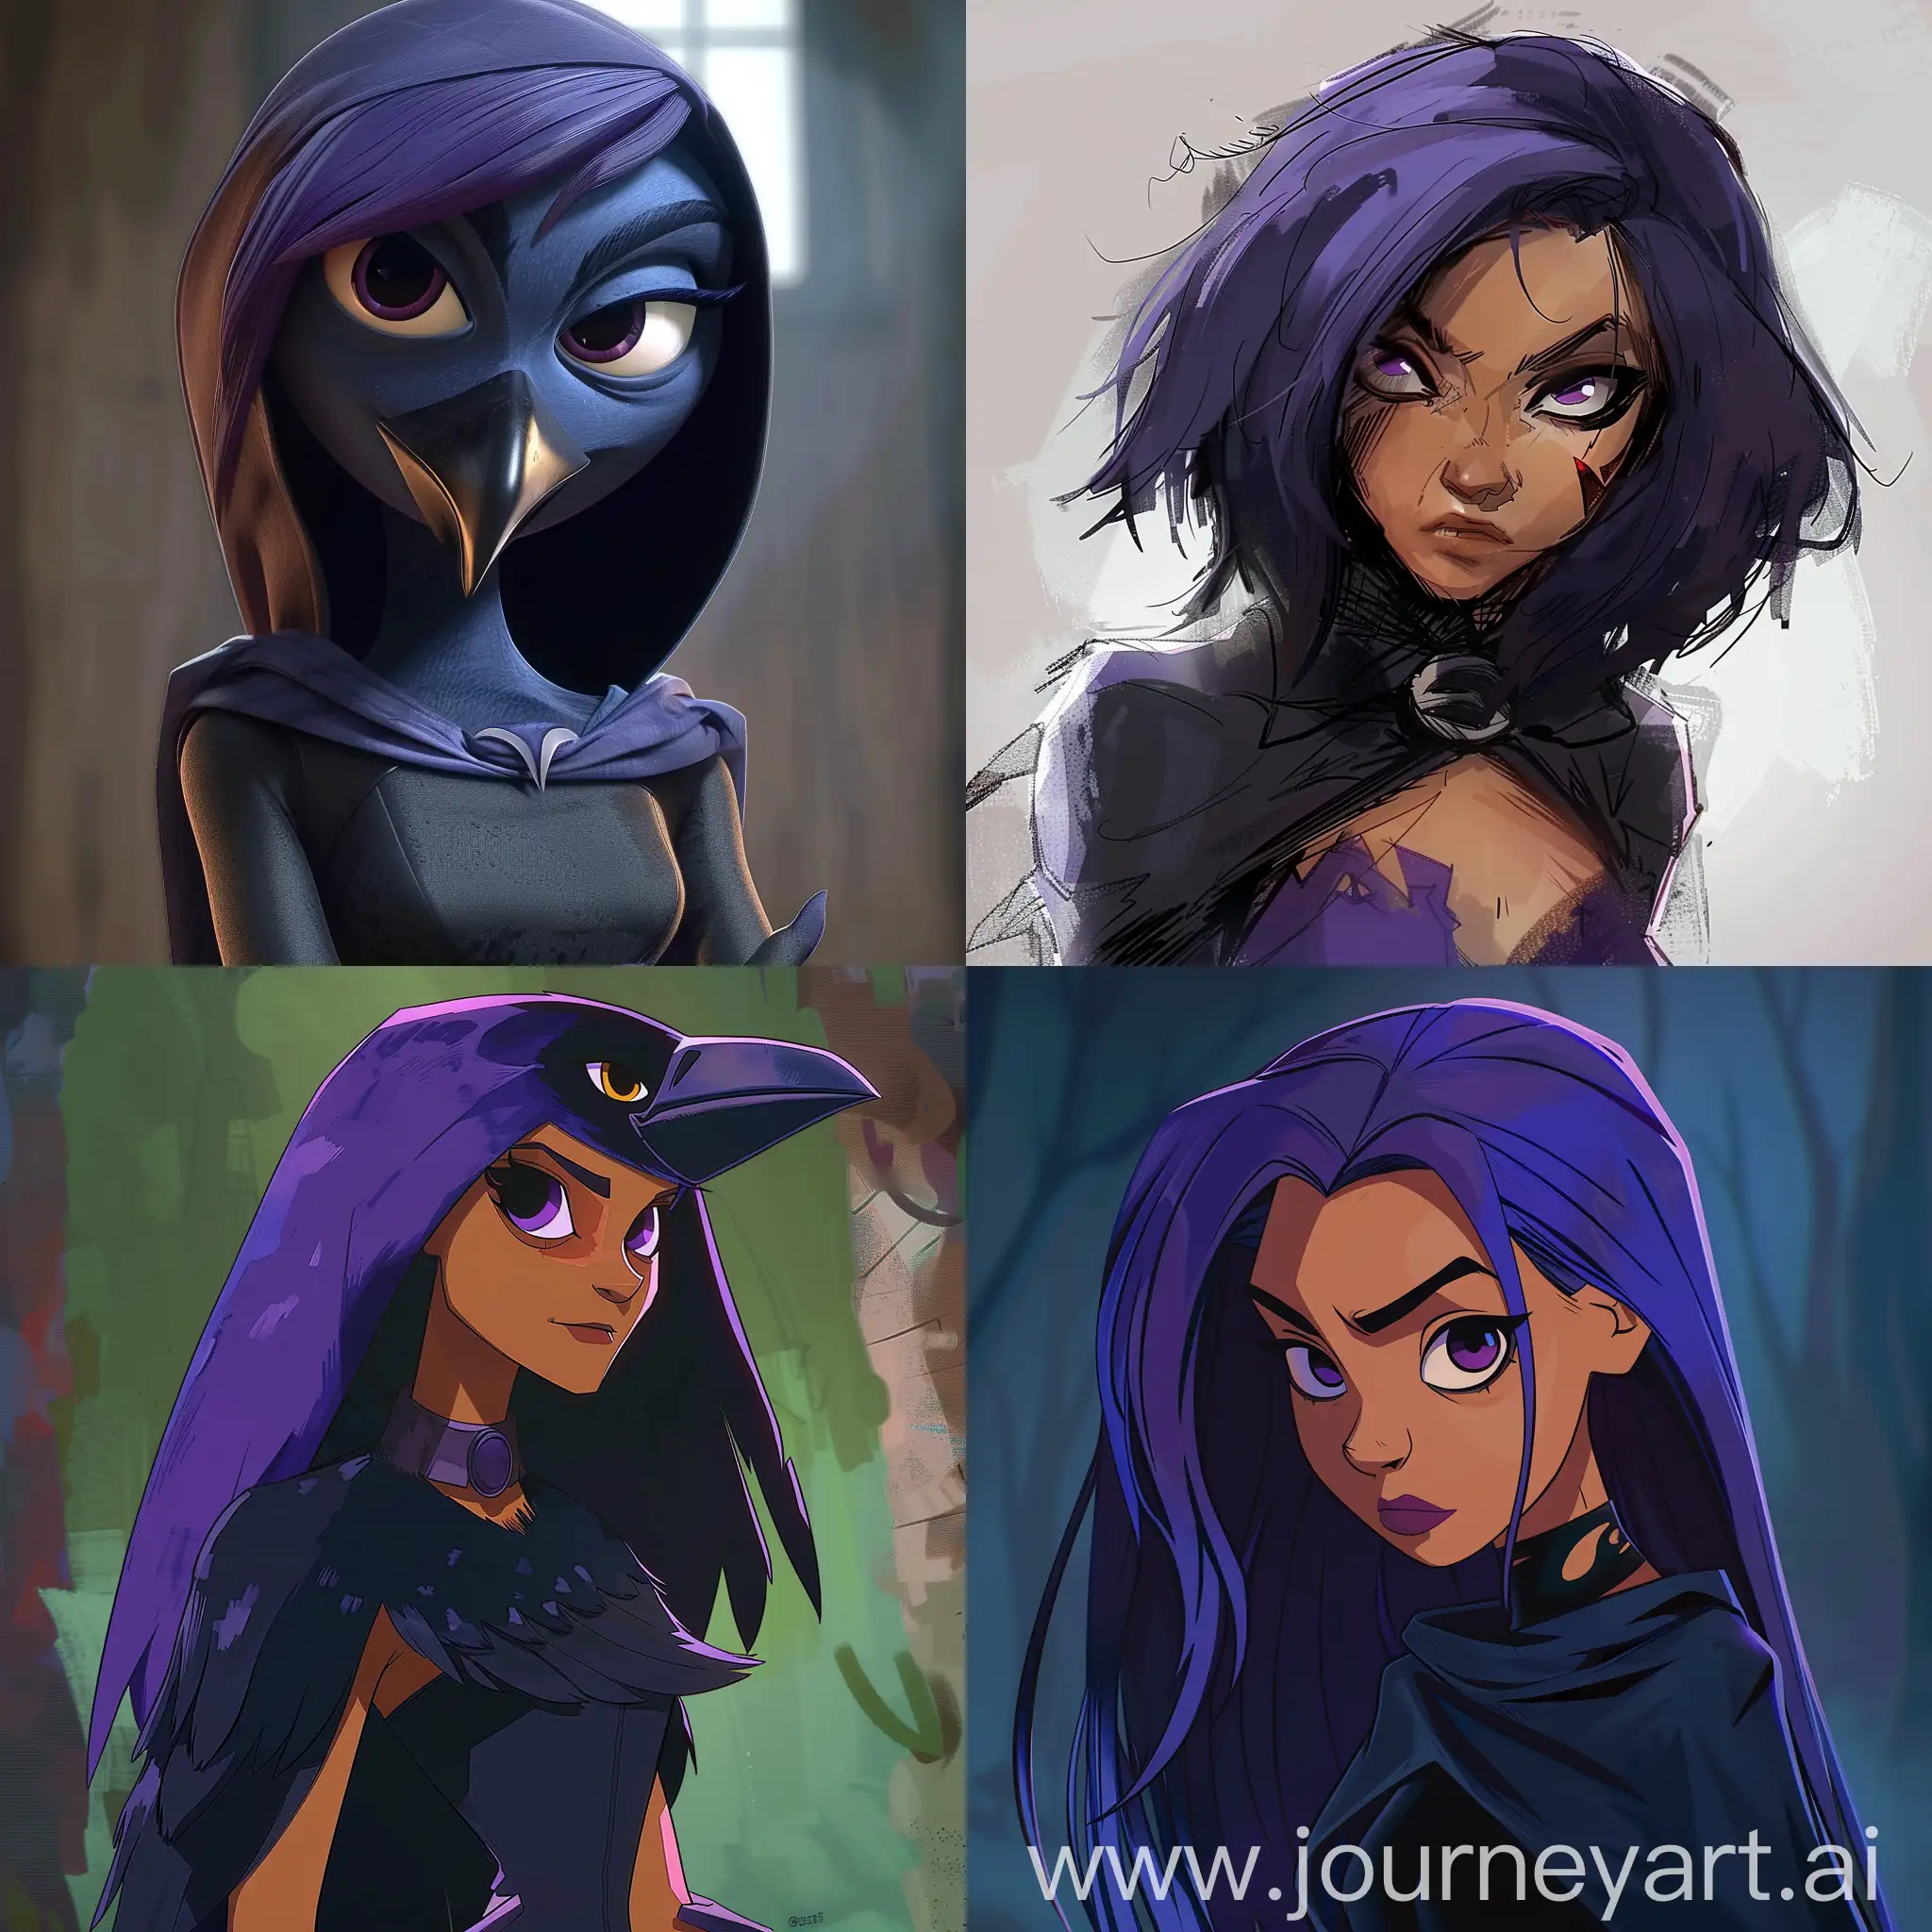 Raven-Teen-Titans-2003-Cartoon-Character-in-Pixar-Style